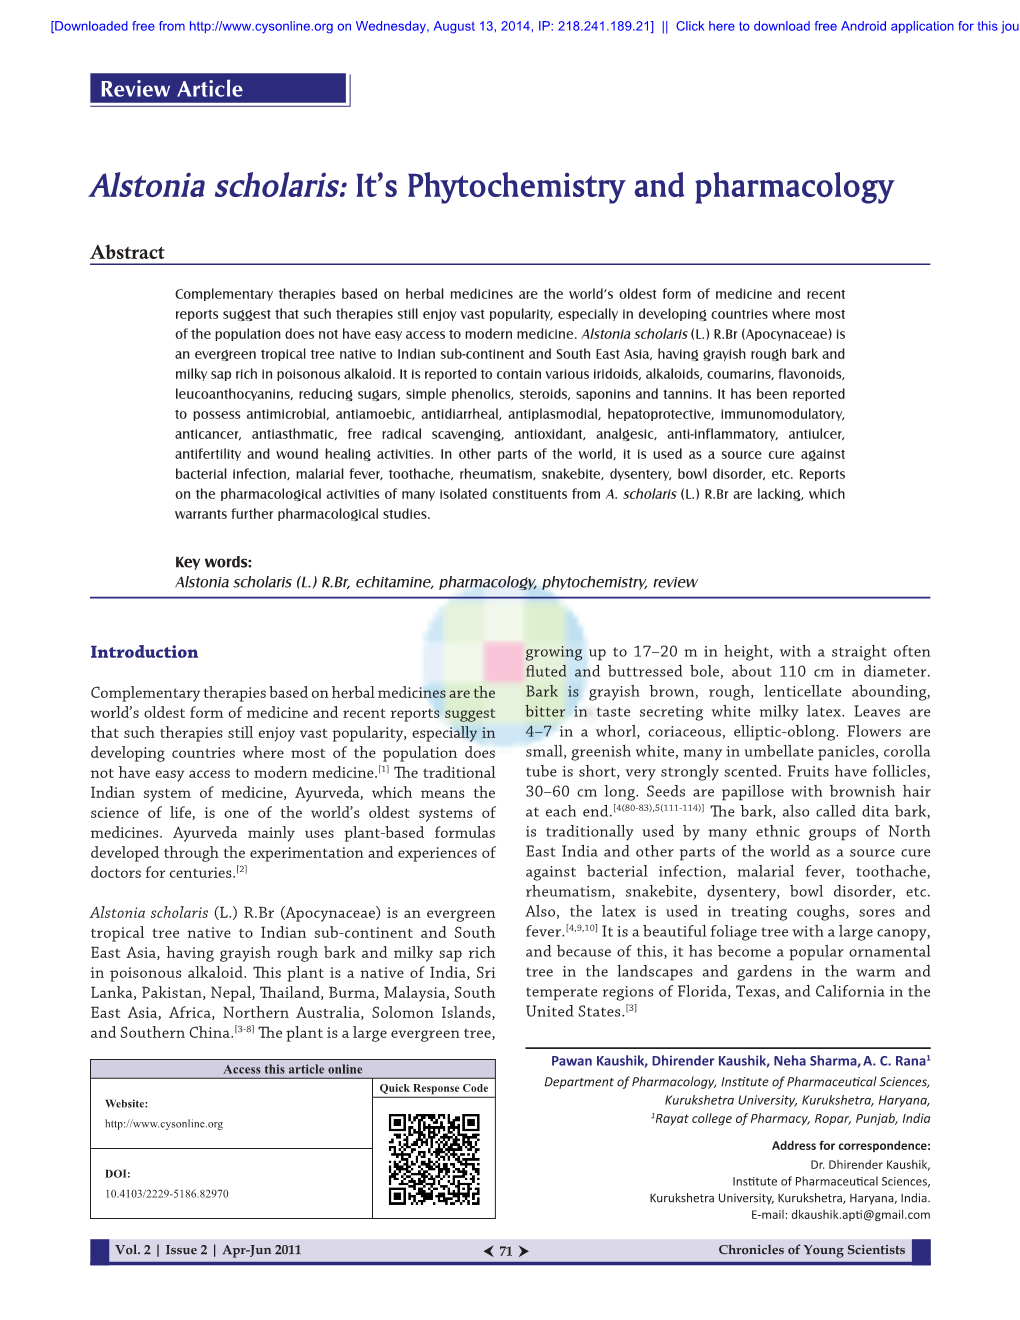 Alstonia Scholaris: It's Phytochemistry and Pharmacology